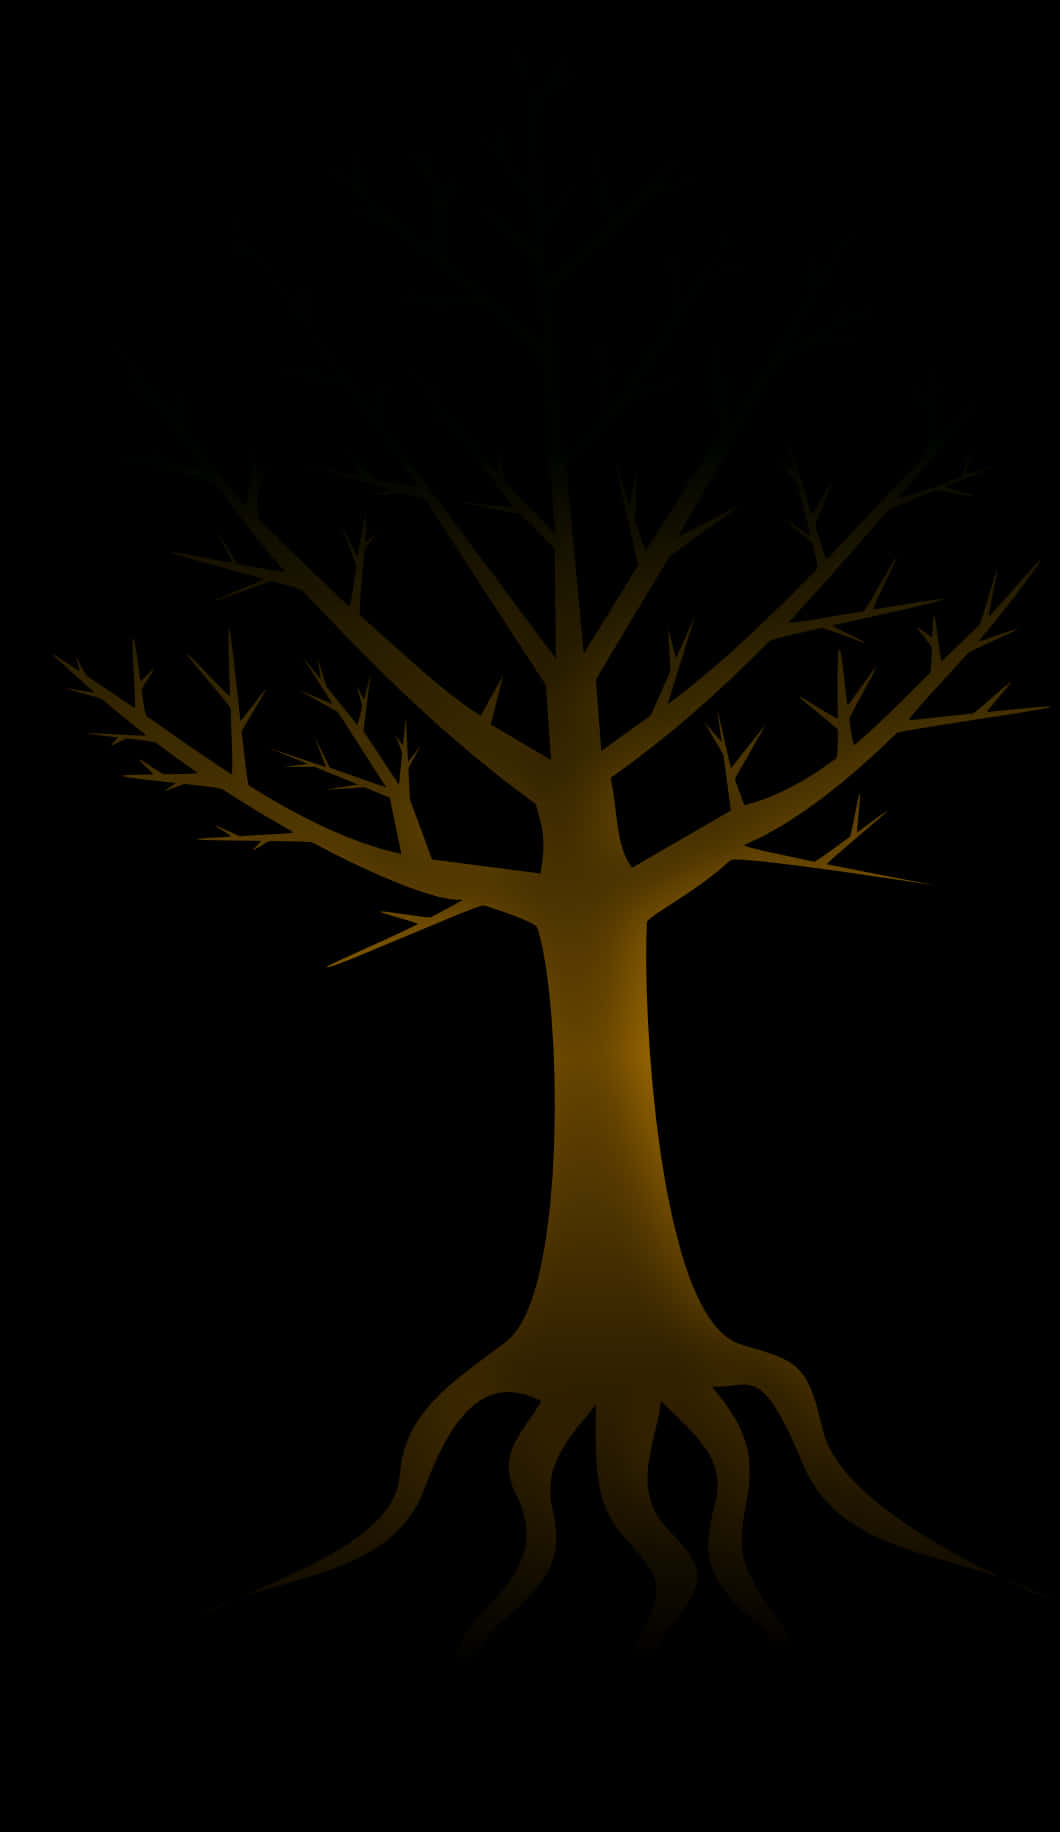 Golden Tree Silhouetteon Black Background